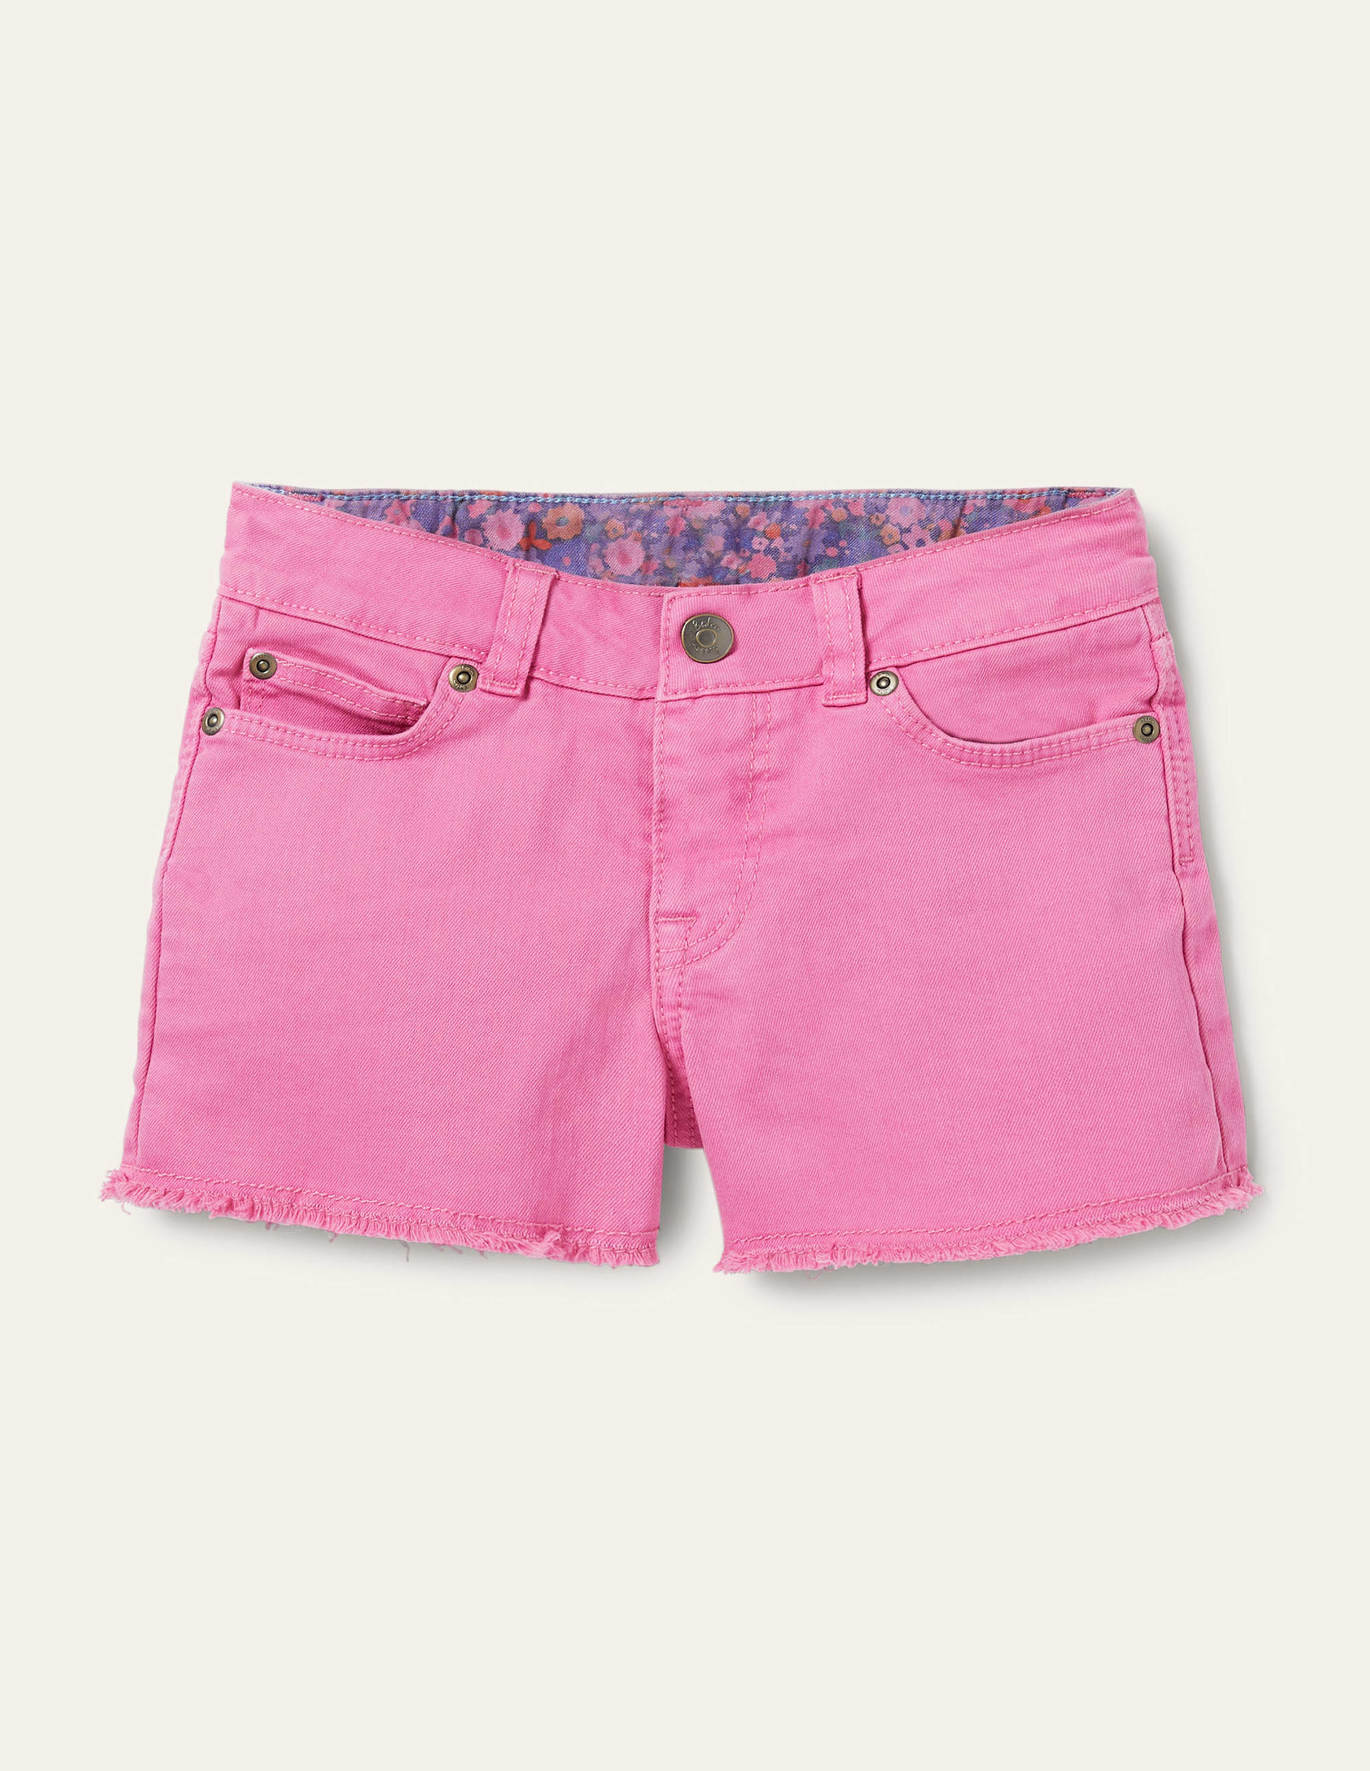 Boden Denim Shorts - Strawberry Ice Pink